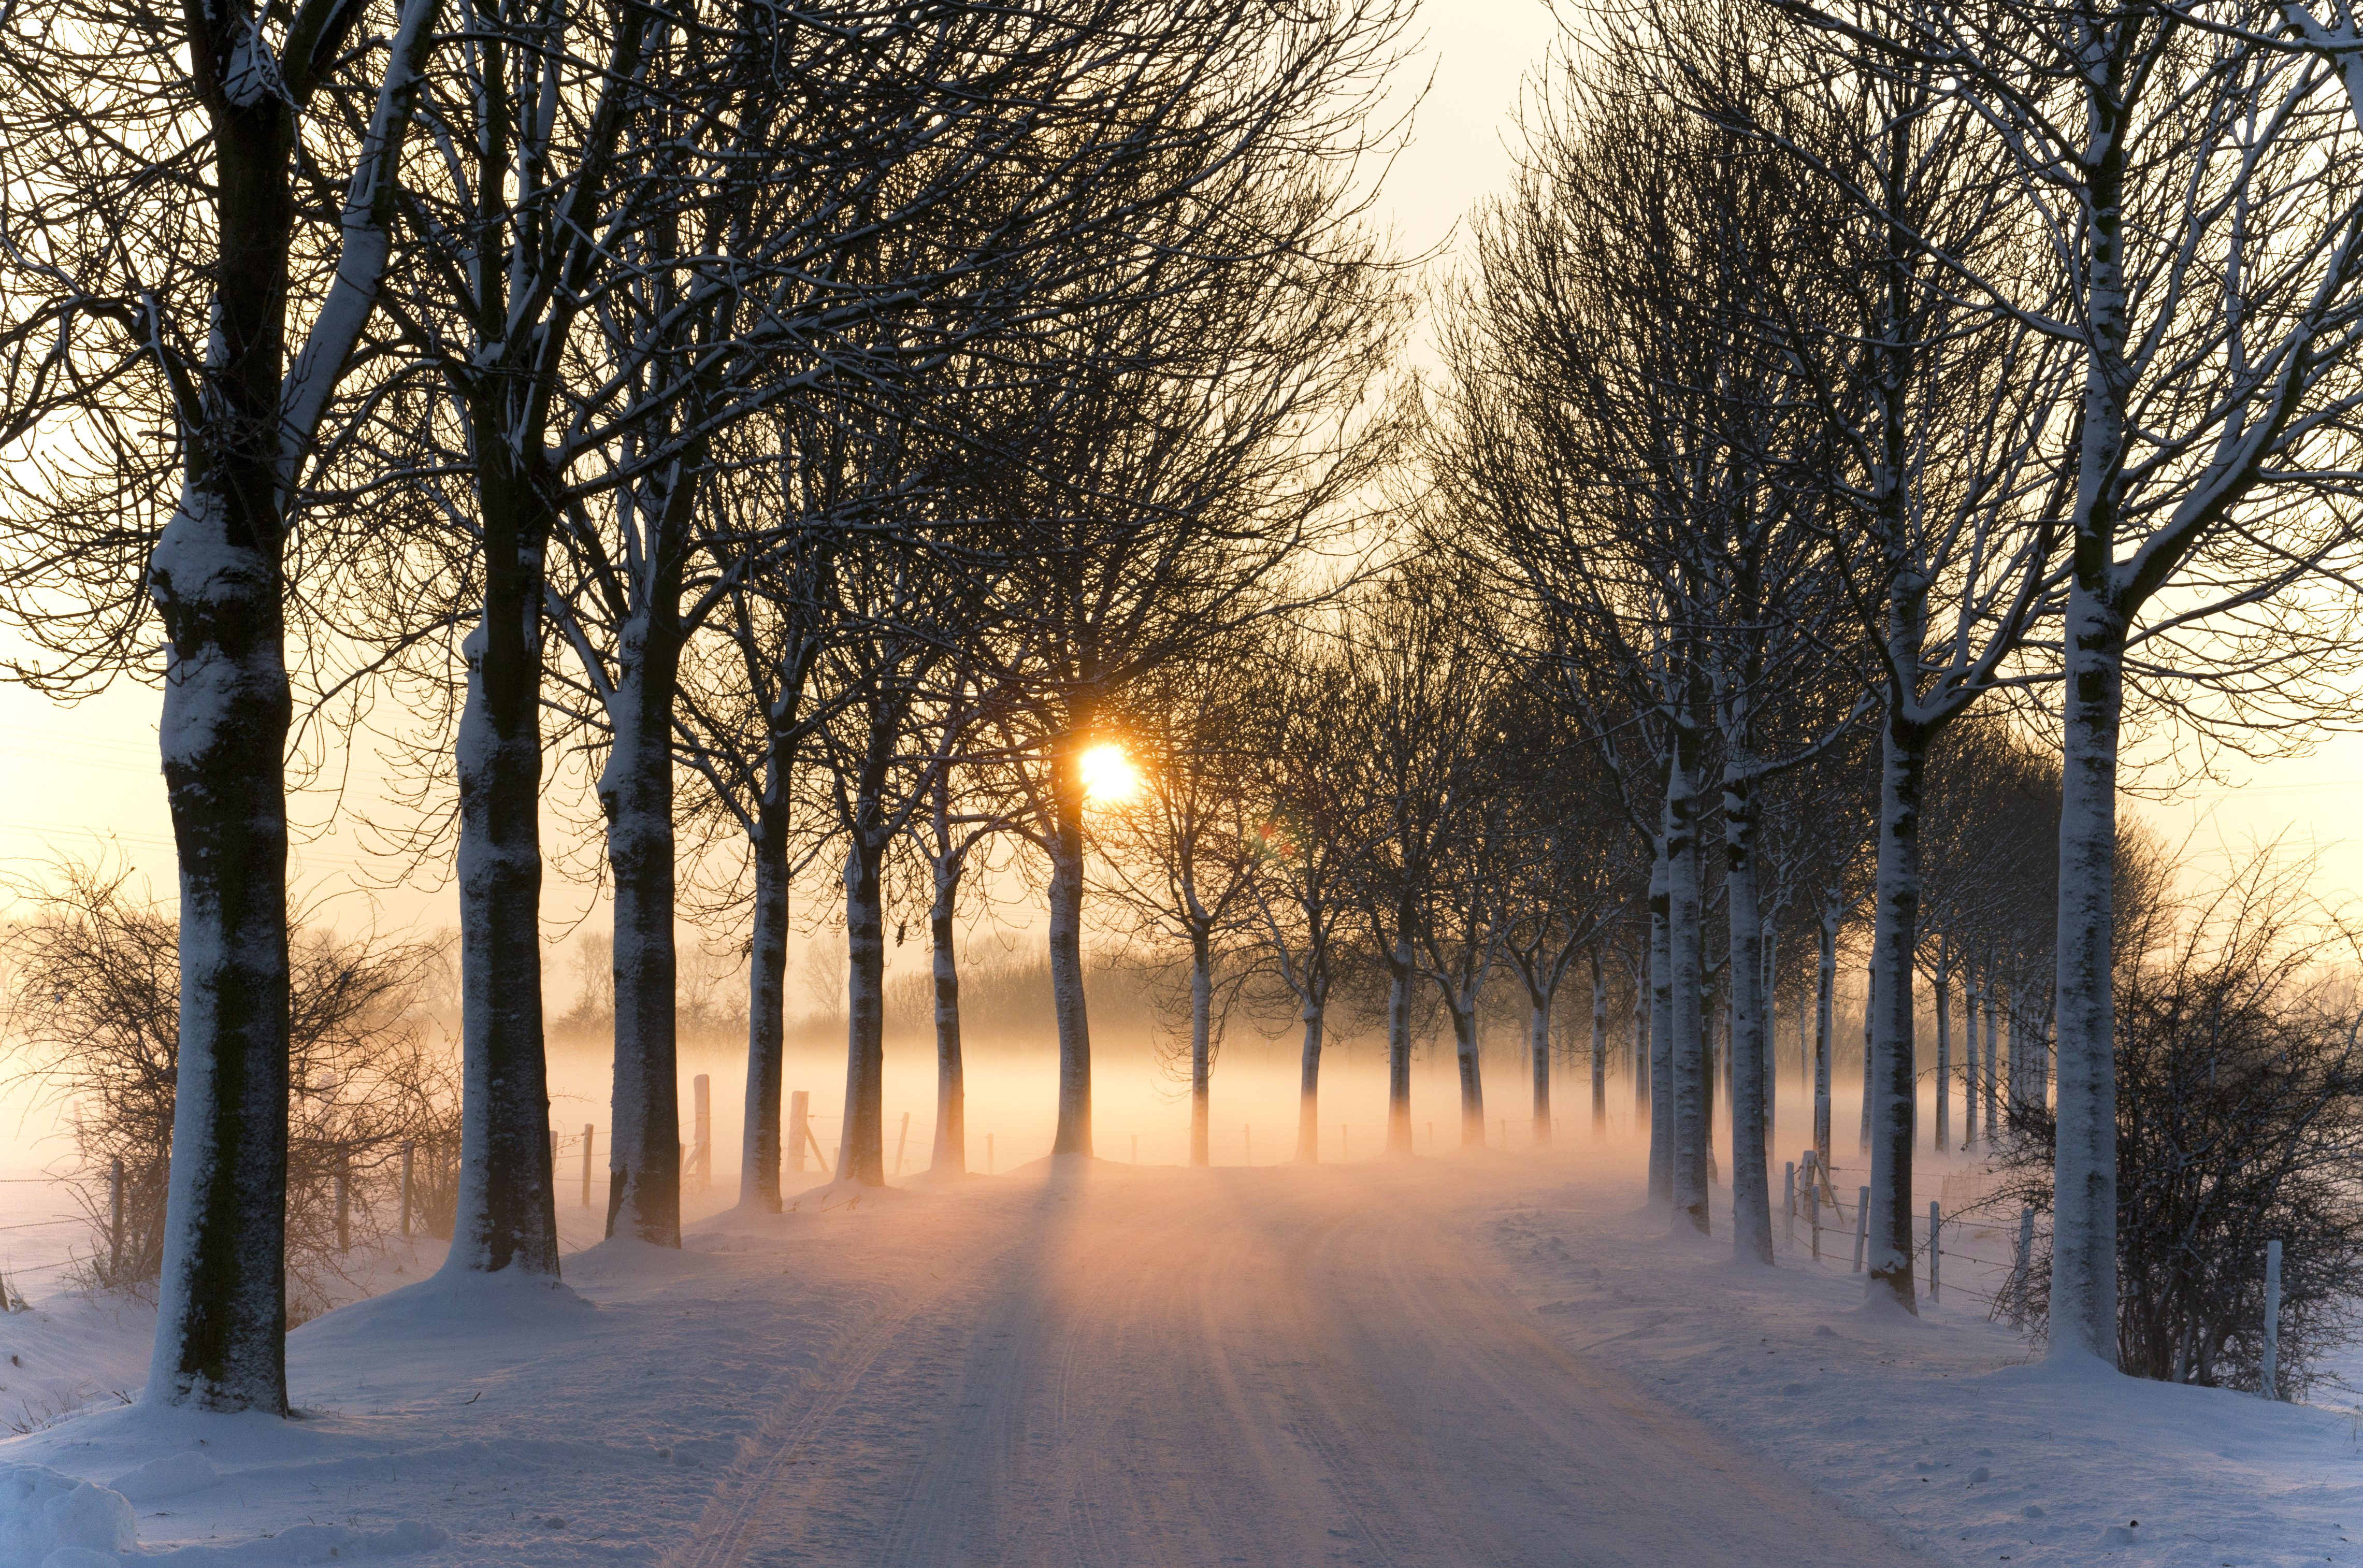 File:Misty winter afternoon (5277611659).jpg - Wikimedia Commons